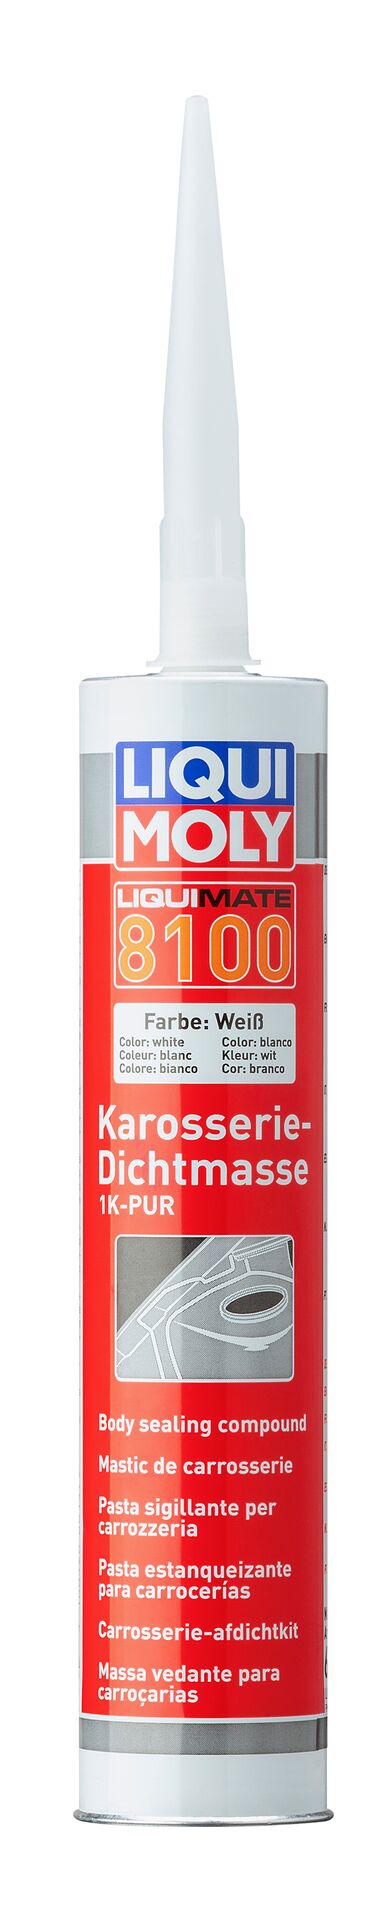 Liqui Moly Liquimate 8100 1K-PUR weiss Karosserie Dichtmasse 300 ml